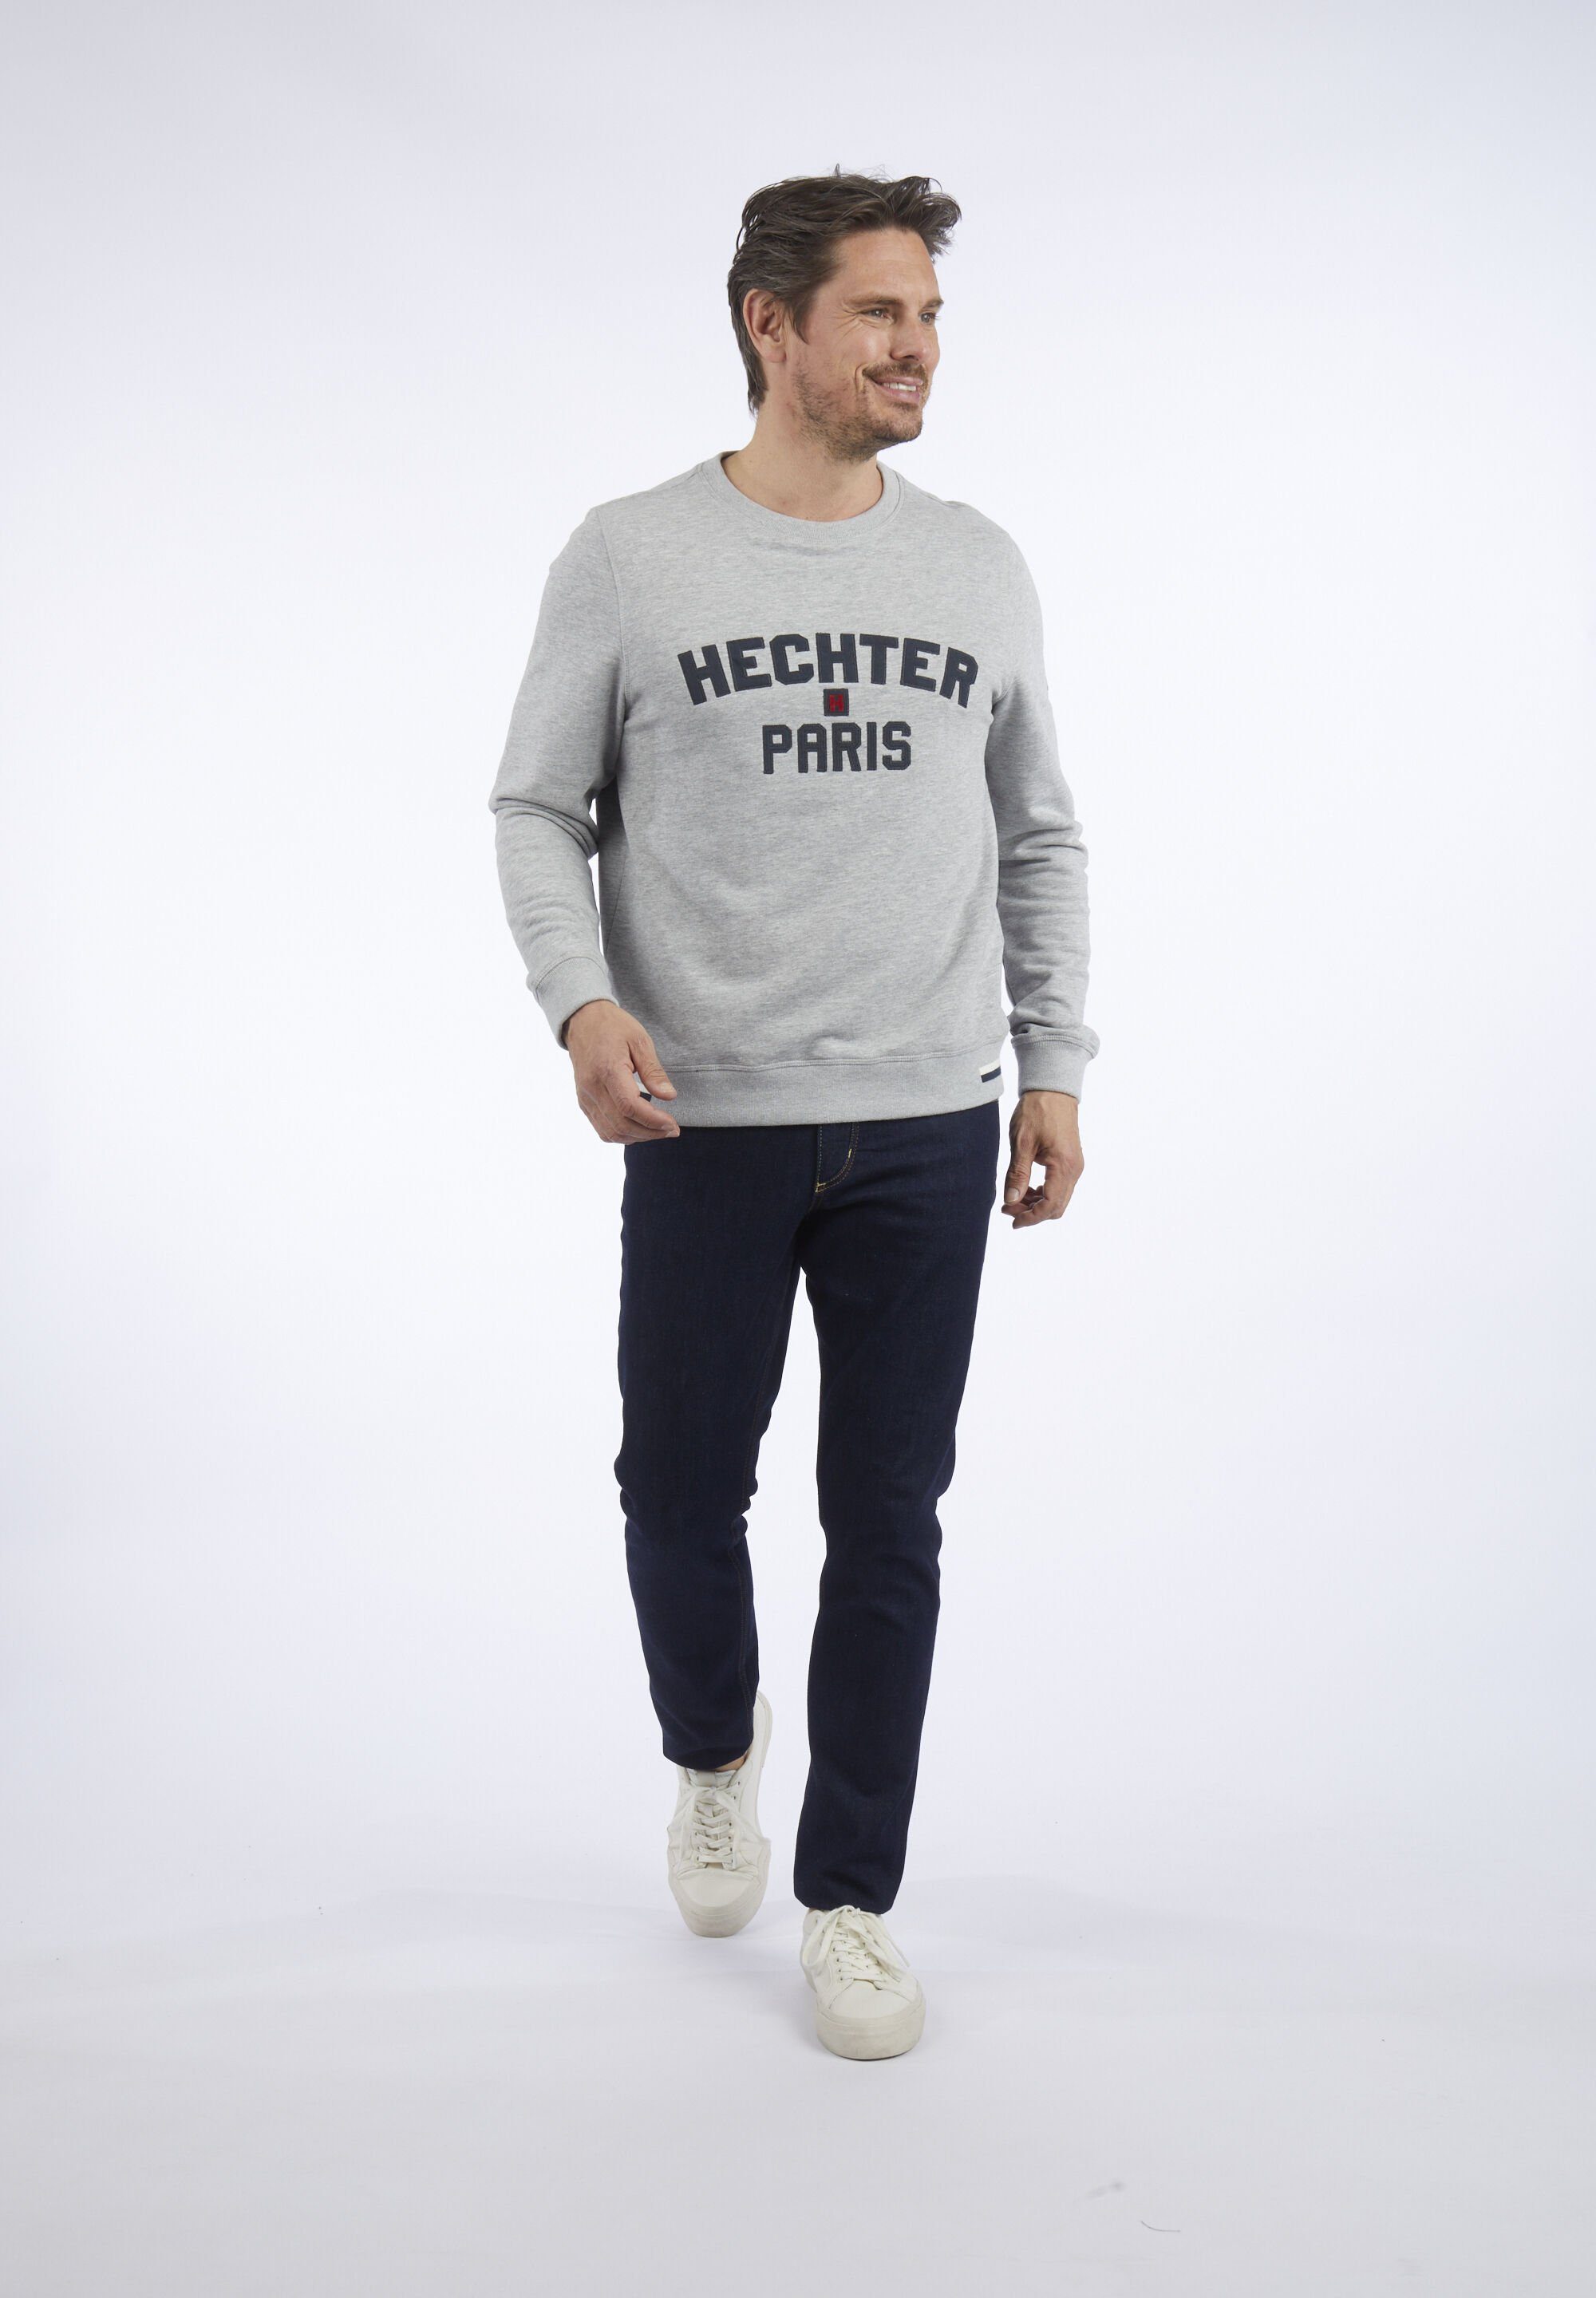 HECHTER PARIS Sweatshirt mit Frontprint